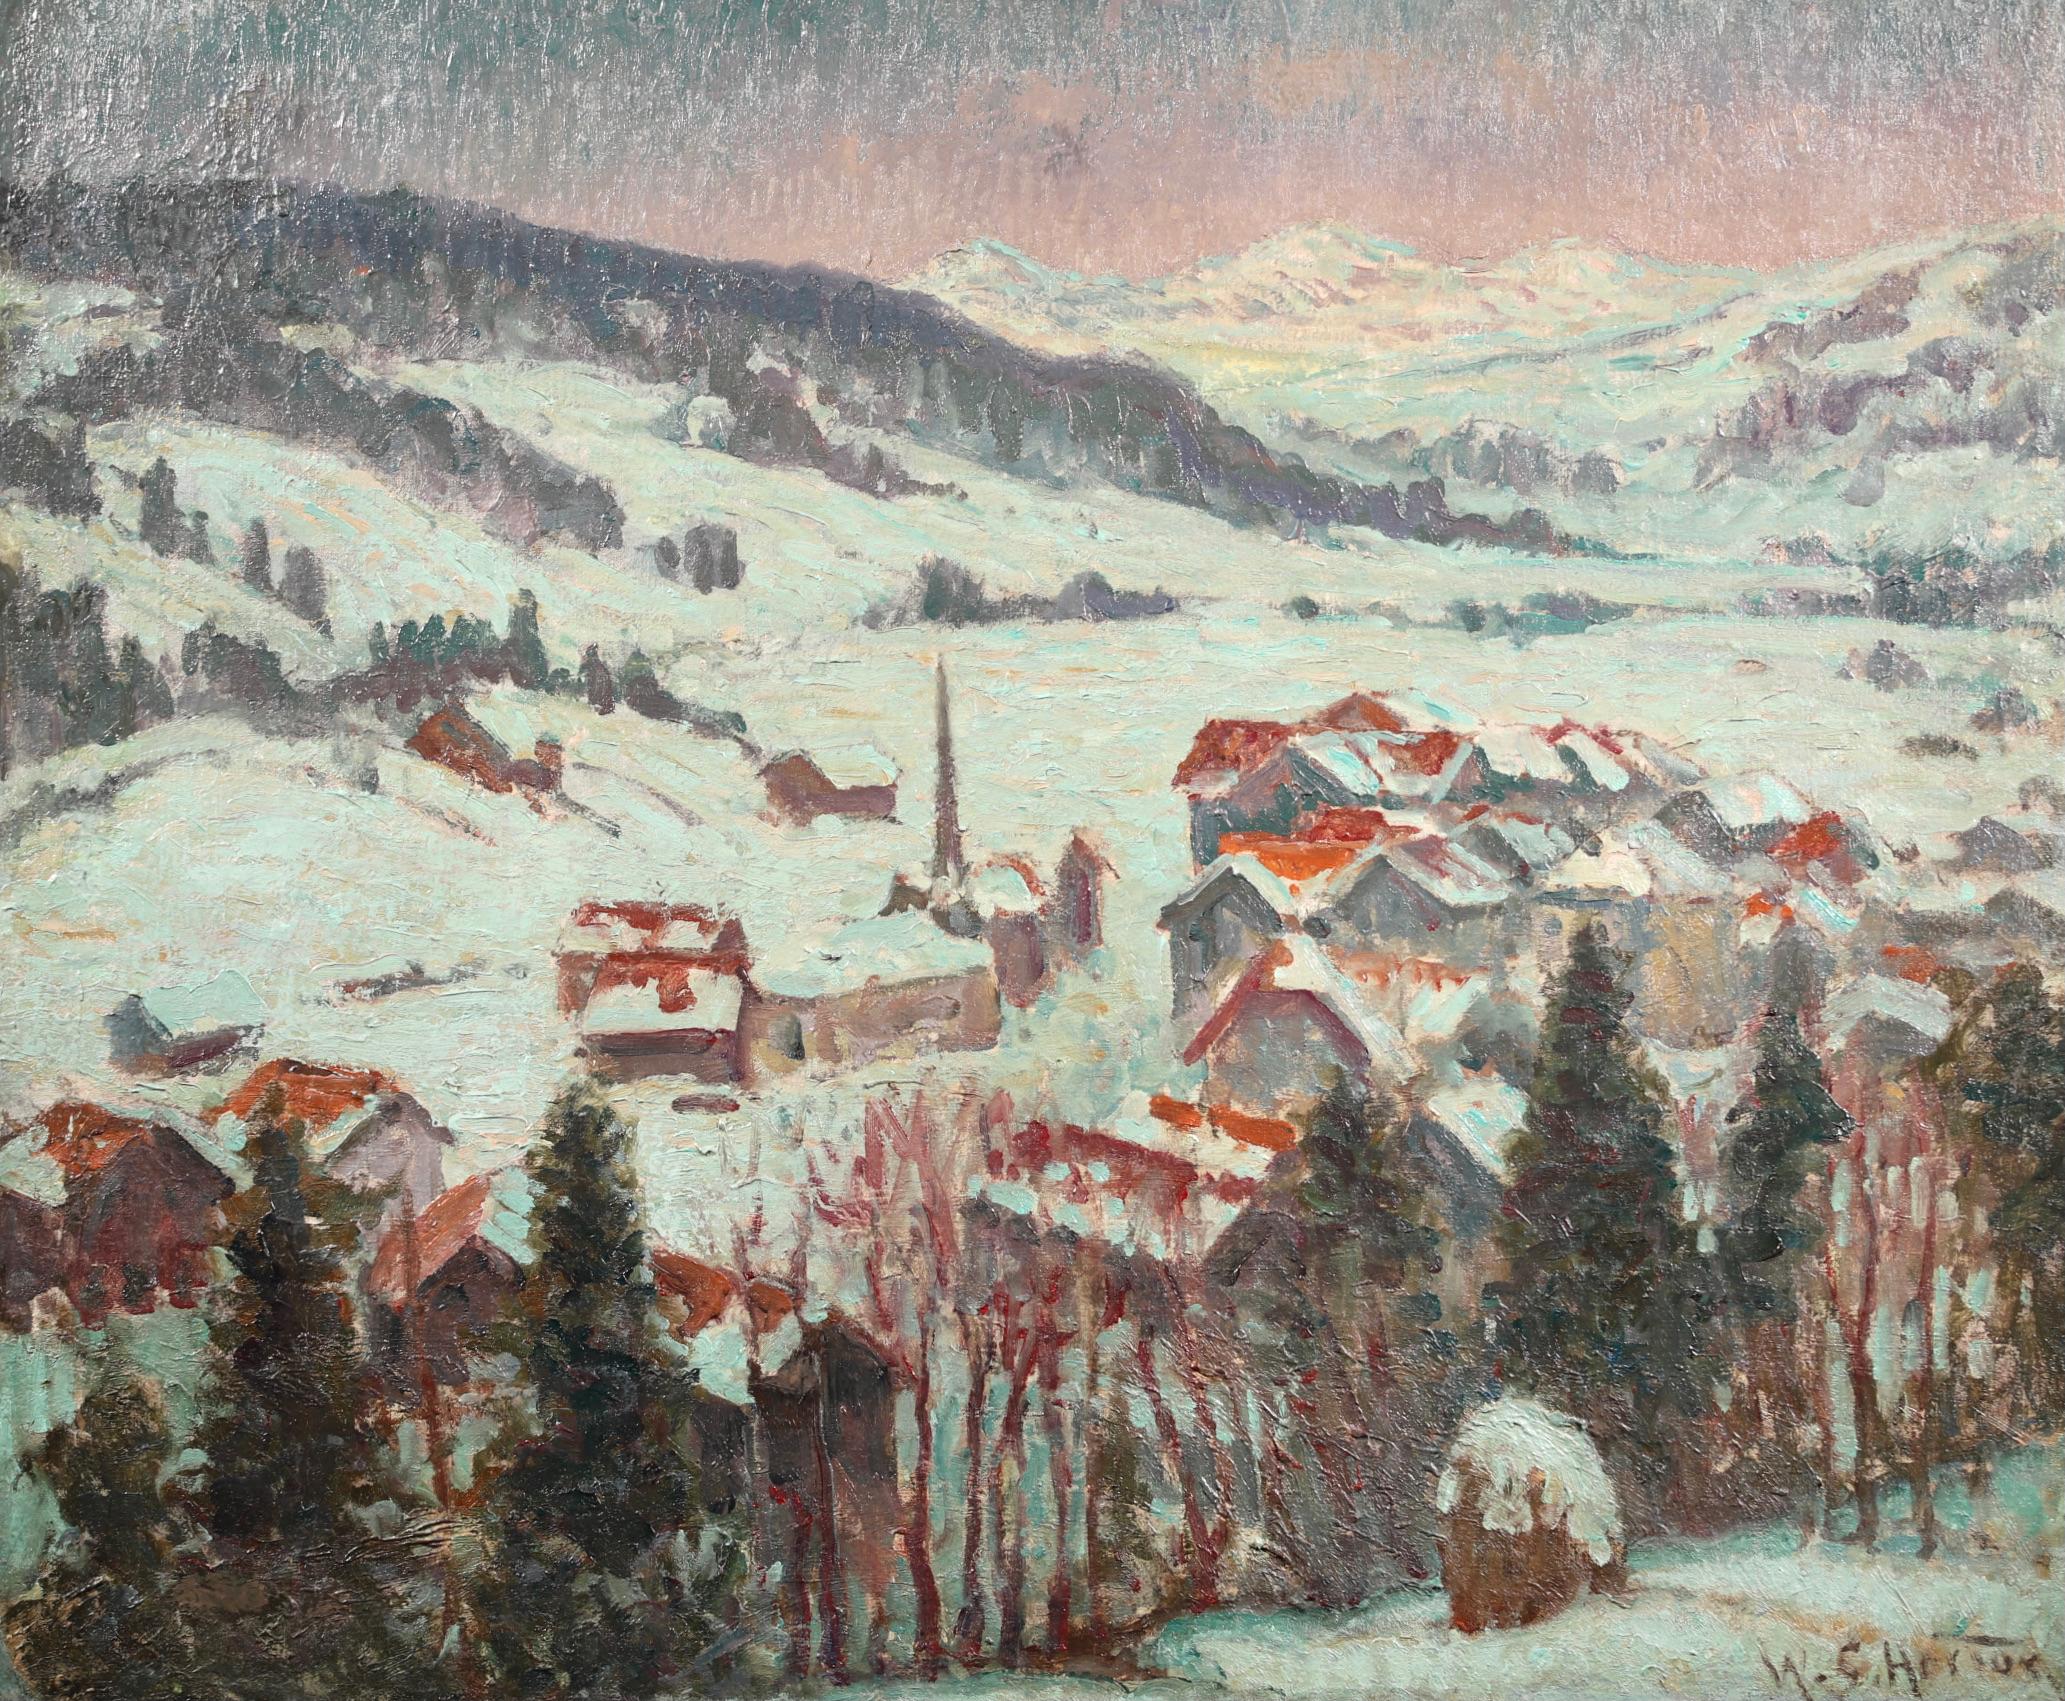 Winter Snow - Gstaad - Impressionist Landscape Oil by William Samuel Horton